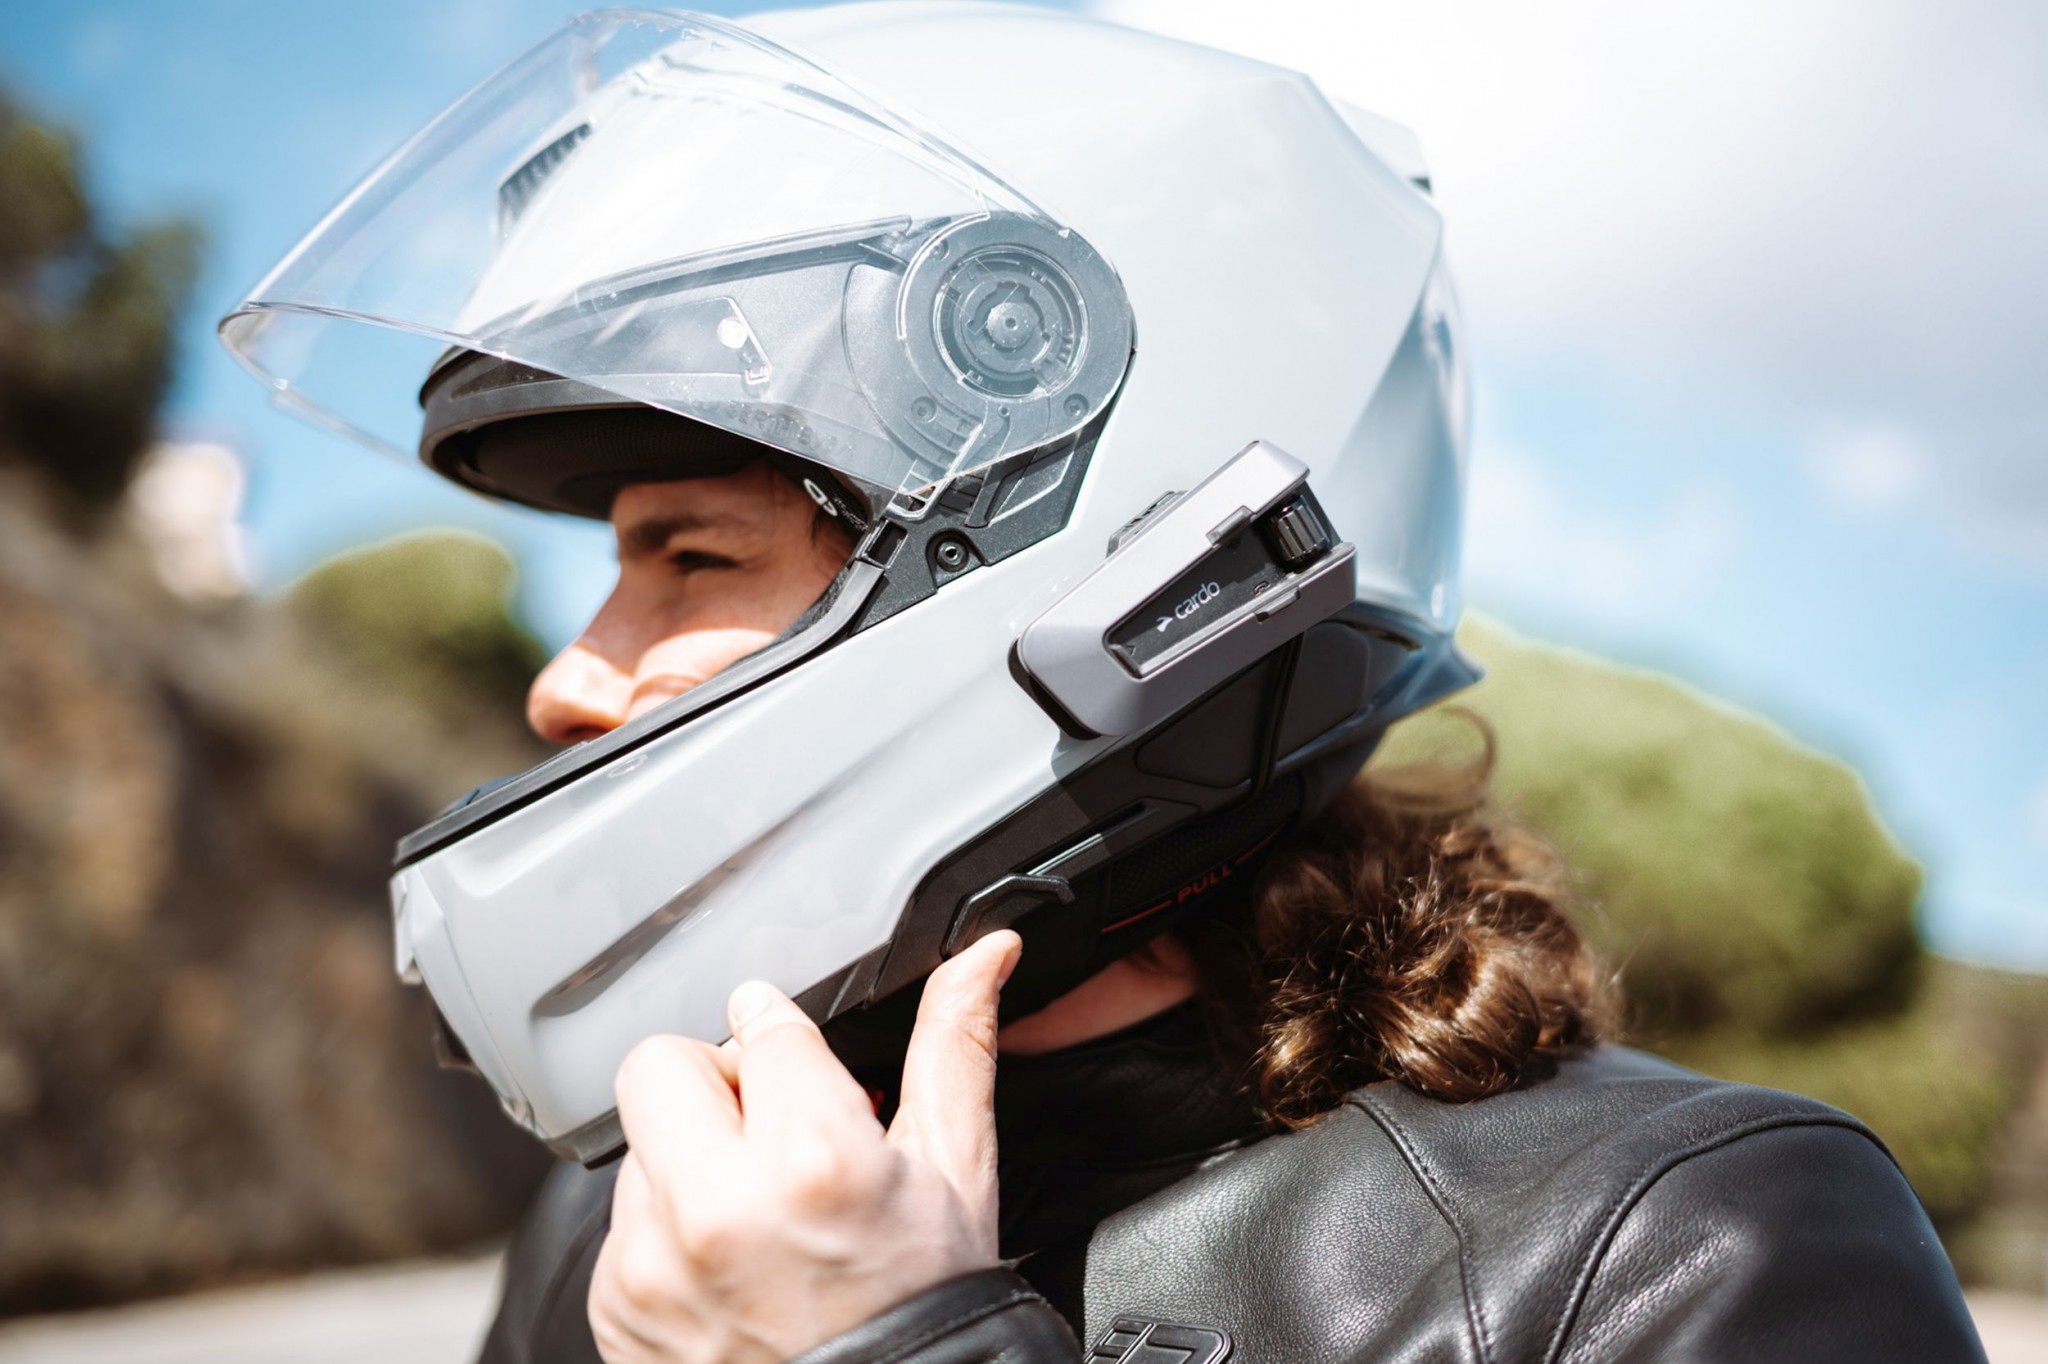 Teste do capacete de turismo desportivo Schuberth S3 - Imagem 47